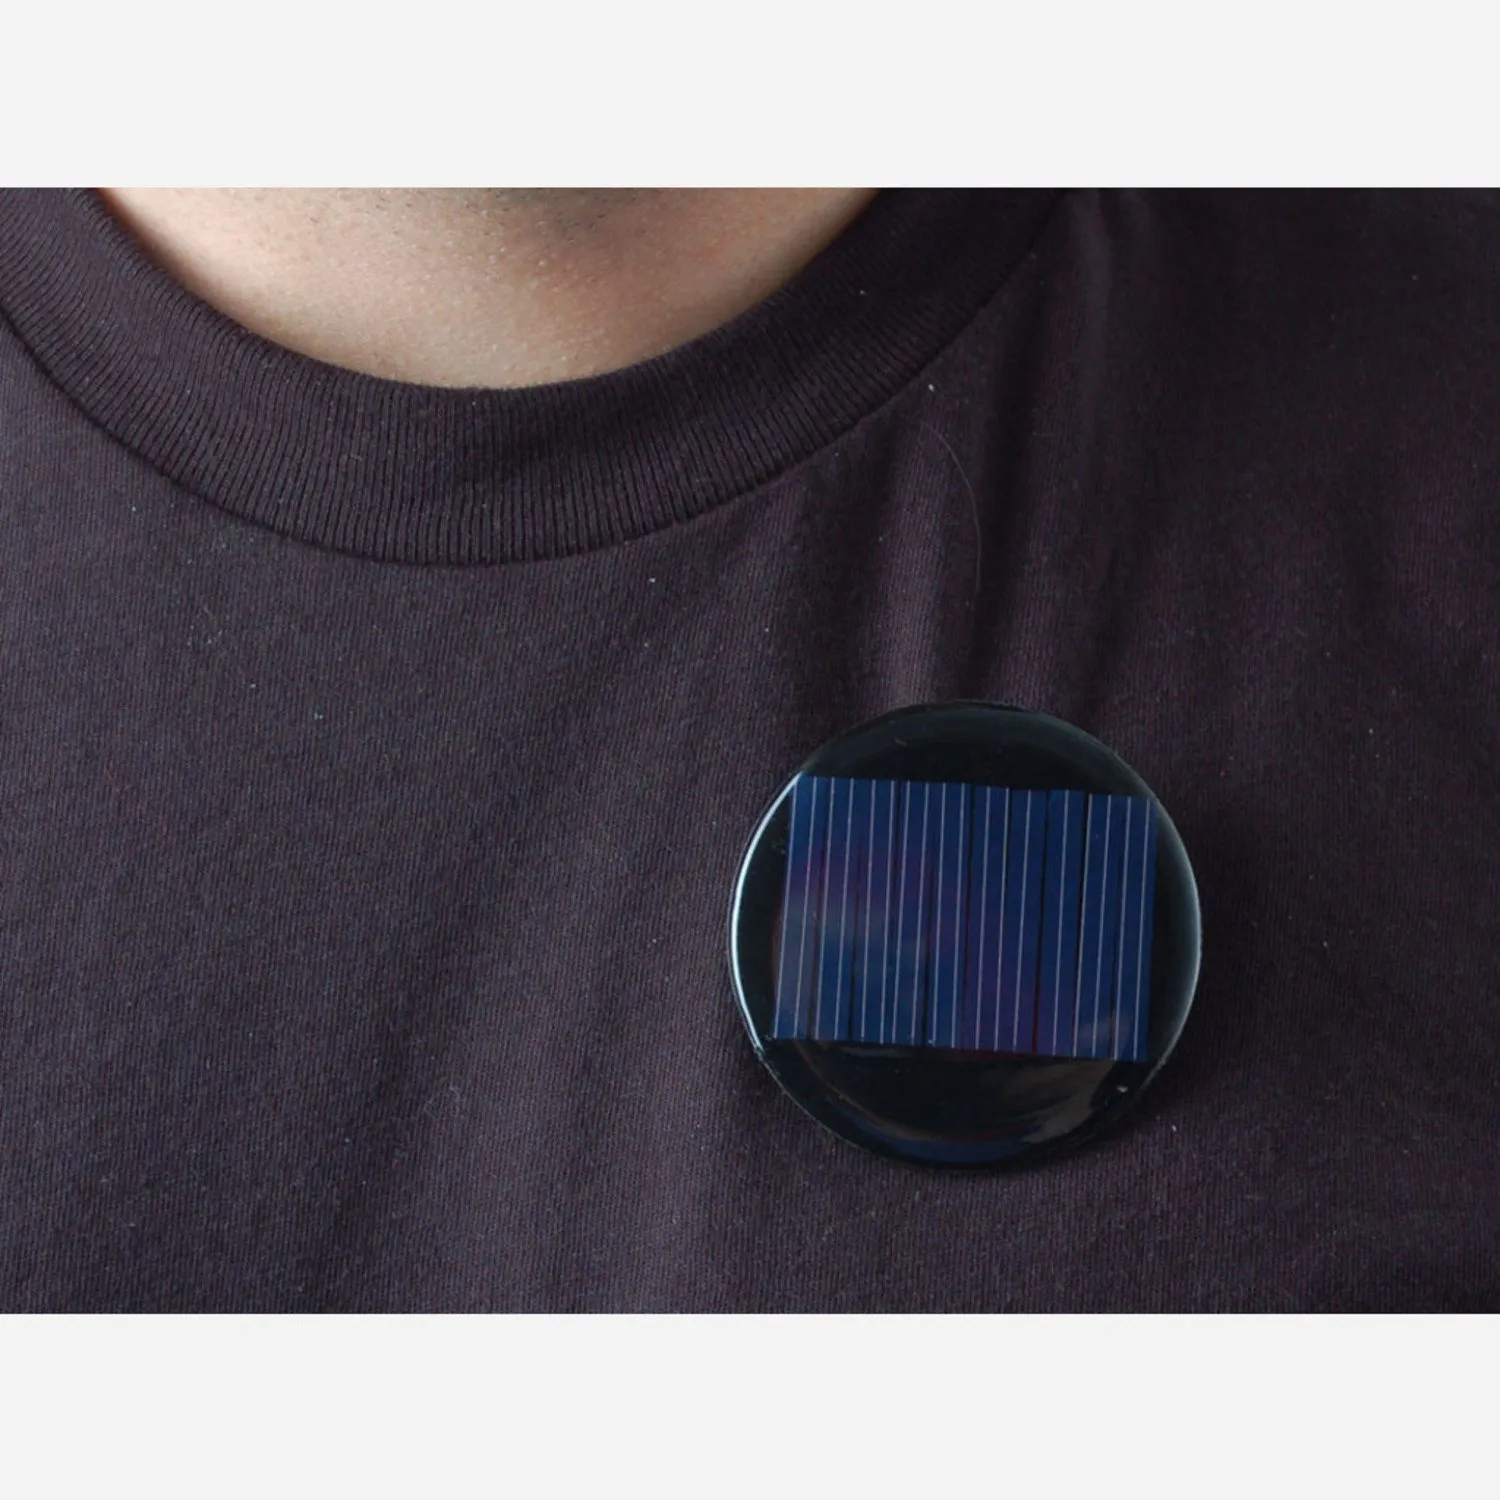 Photo of Round Solar Panel Skill Badge - 5V / 40mA